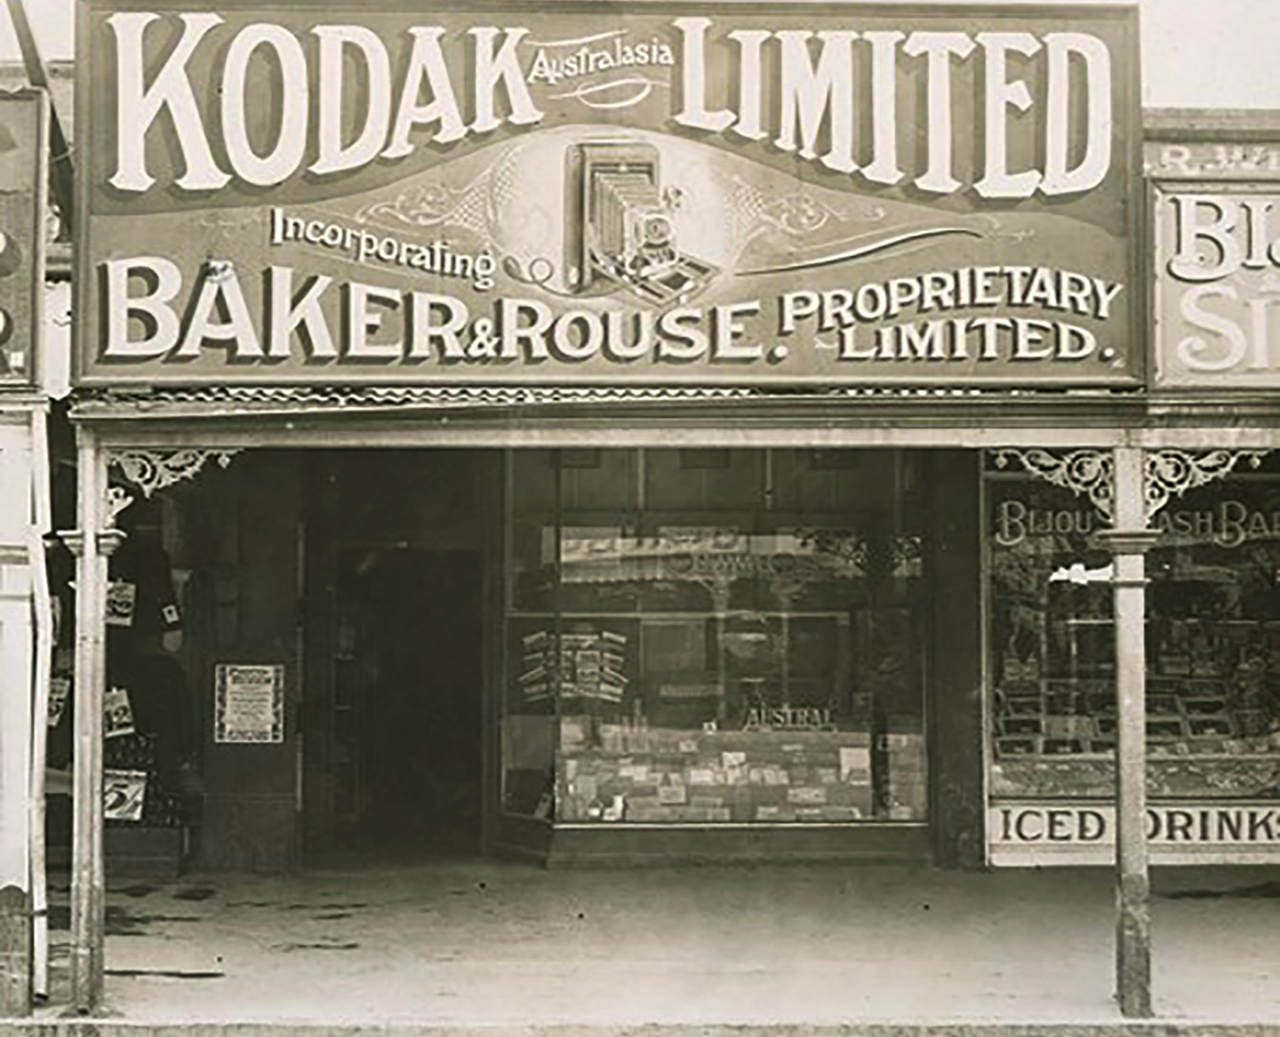 1280x1037px-Kodak-Australasia-Limited-Shop-in-Argent-Street,-Broken-Hill,-1912-vWA24